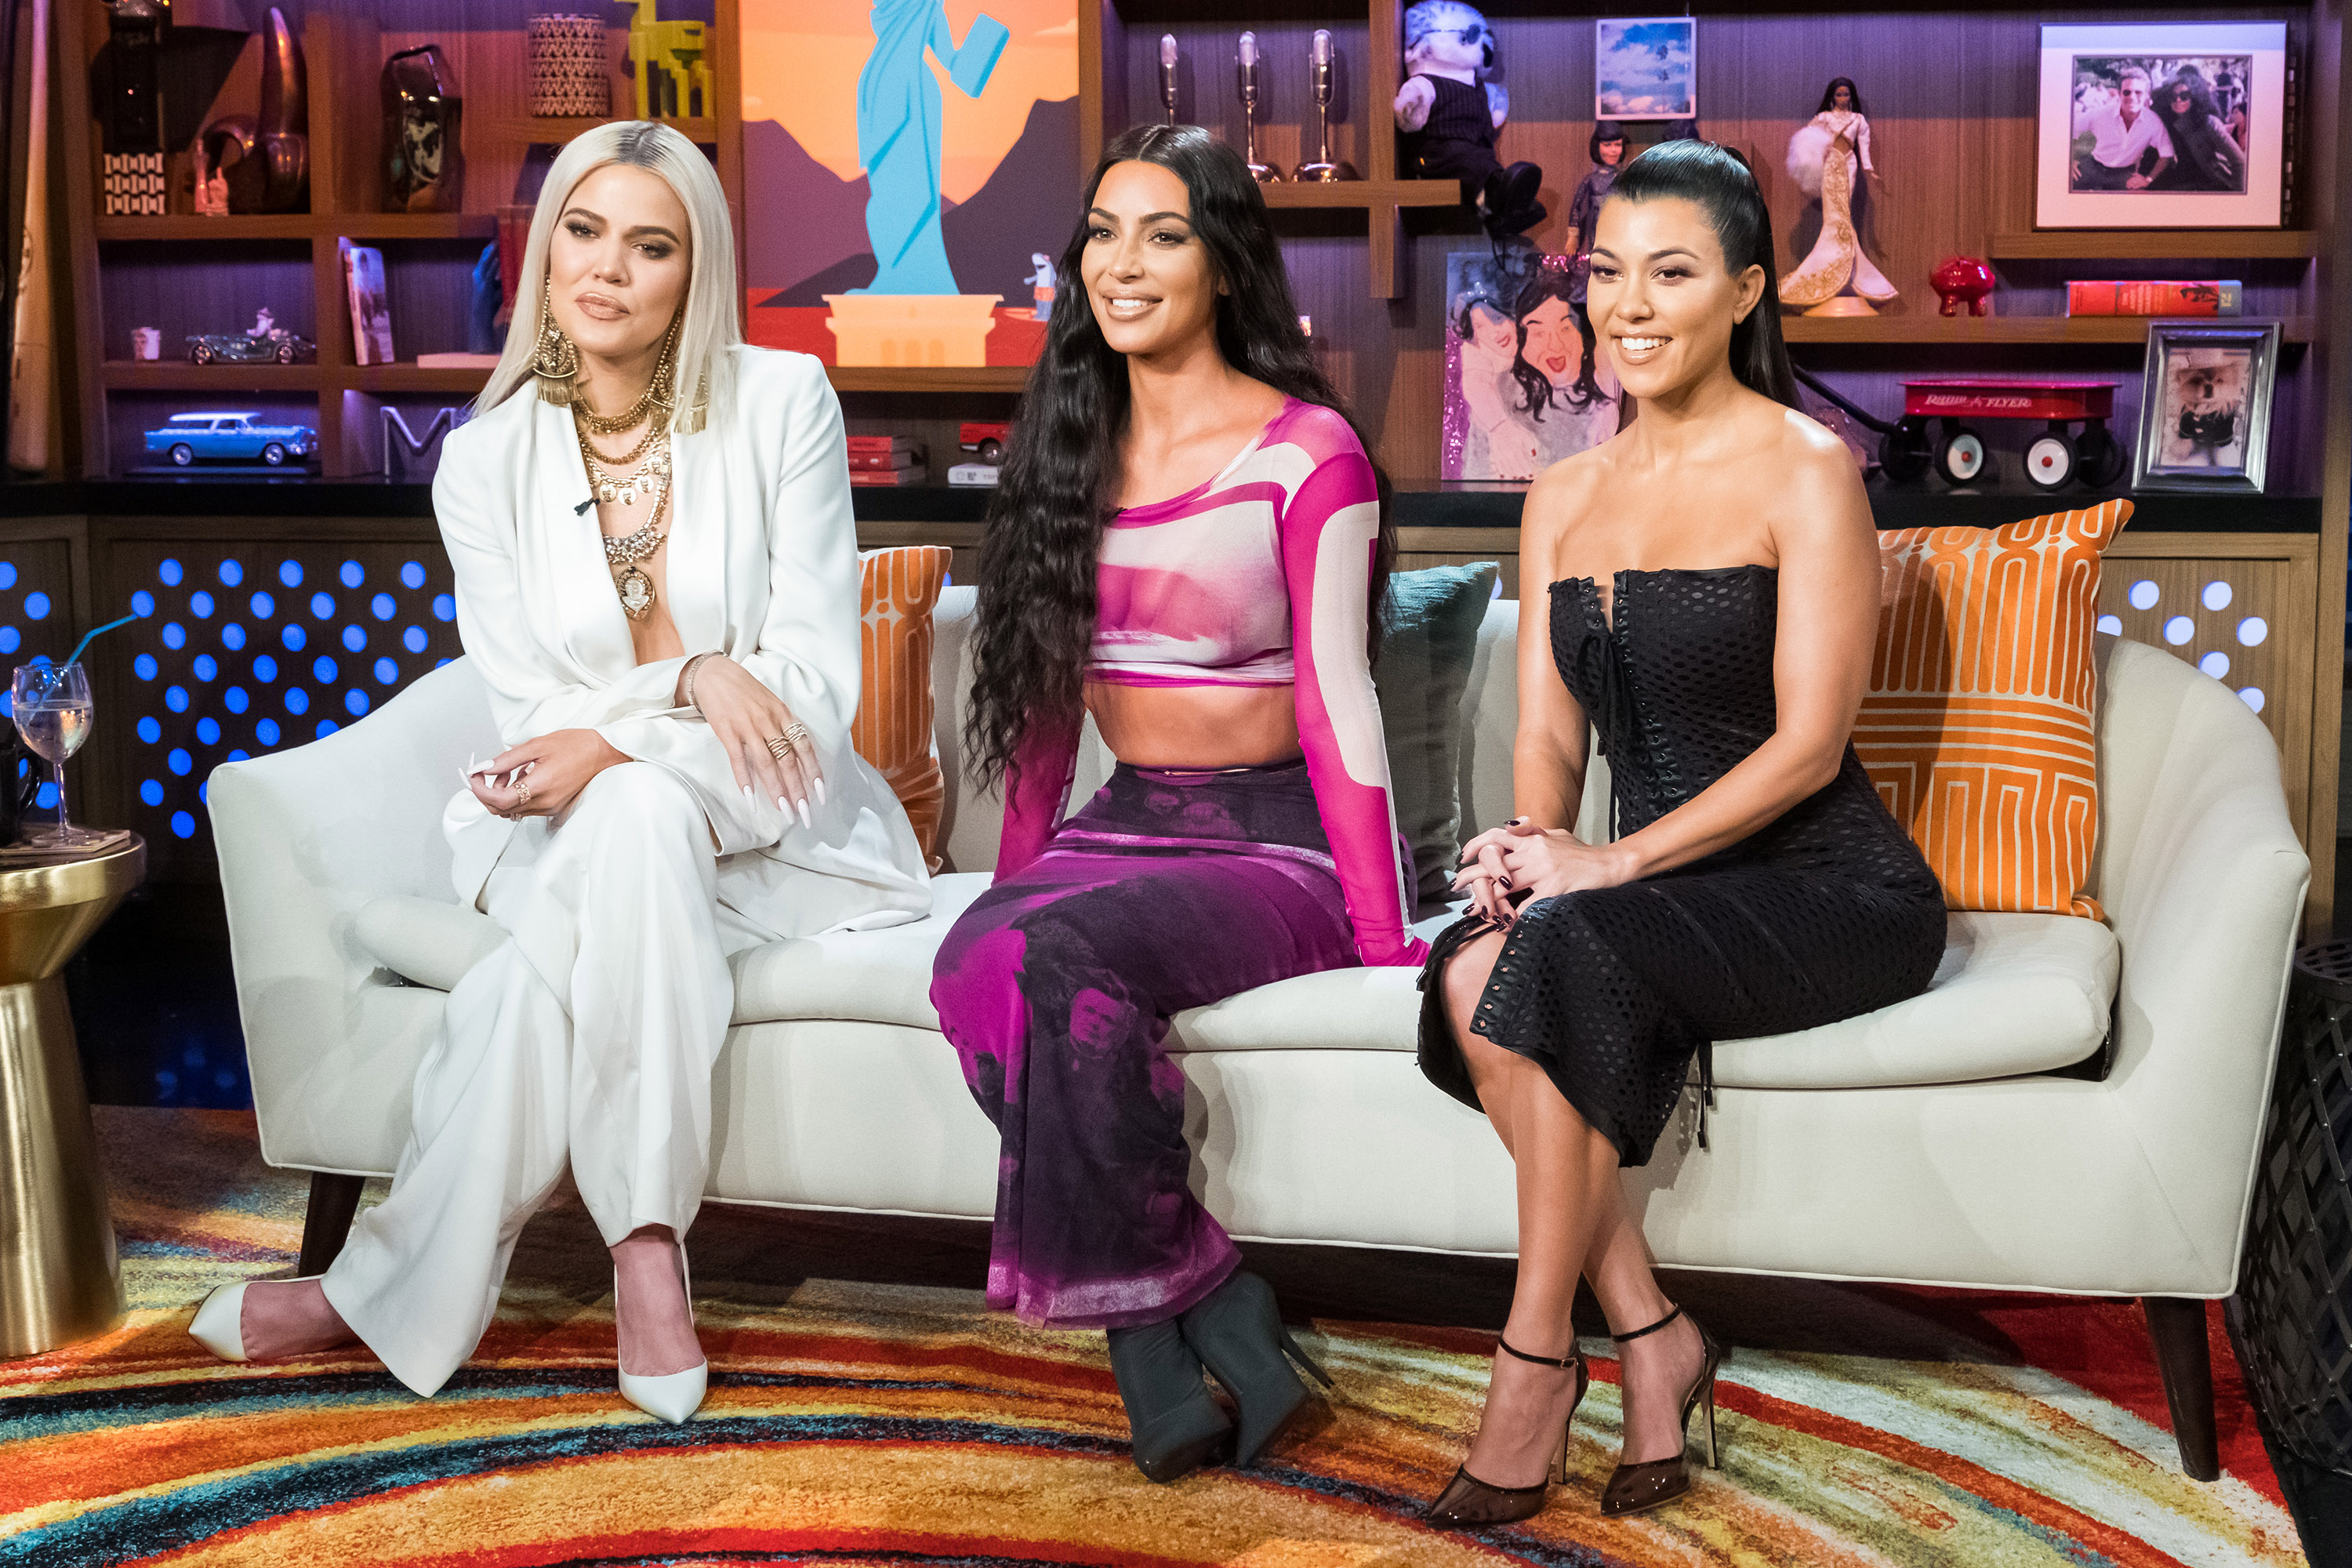 Khloe Kardashian, Kim Kardashian, and Kourtney Kardashian sitting on a white couch and looking on